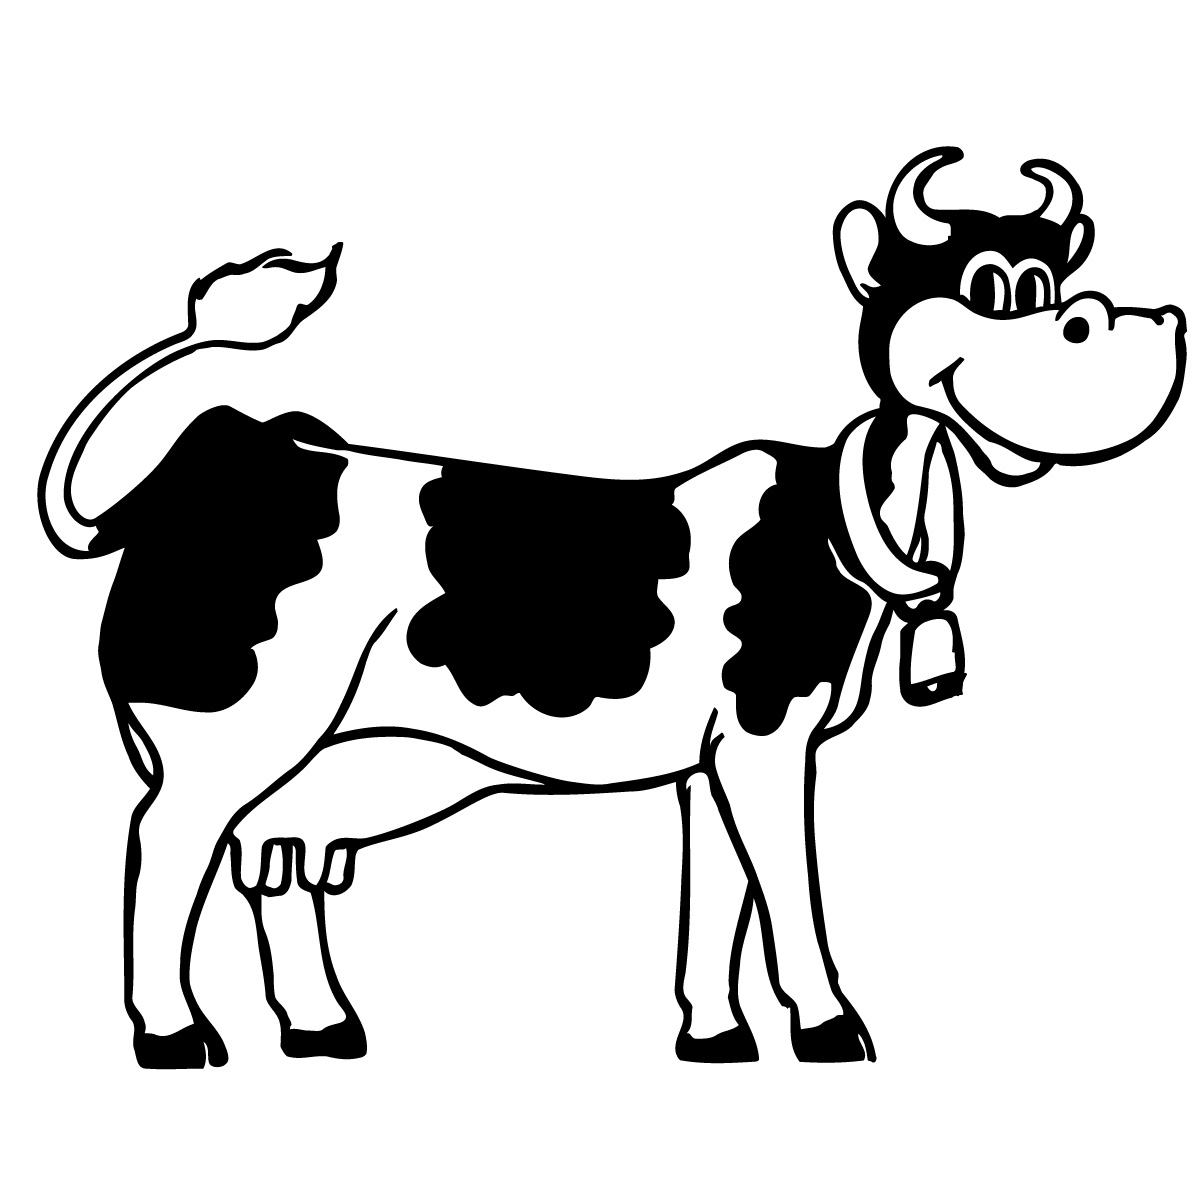 Cartoon Cows 3 Black White Line Animal Coloring Sheet ...